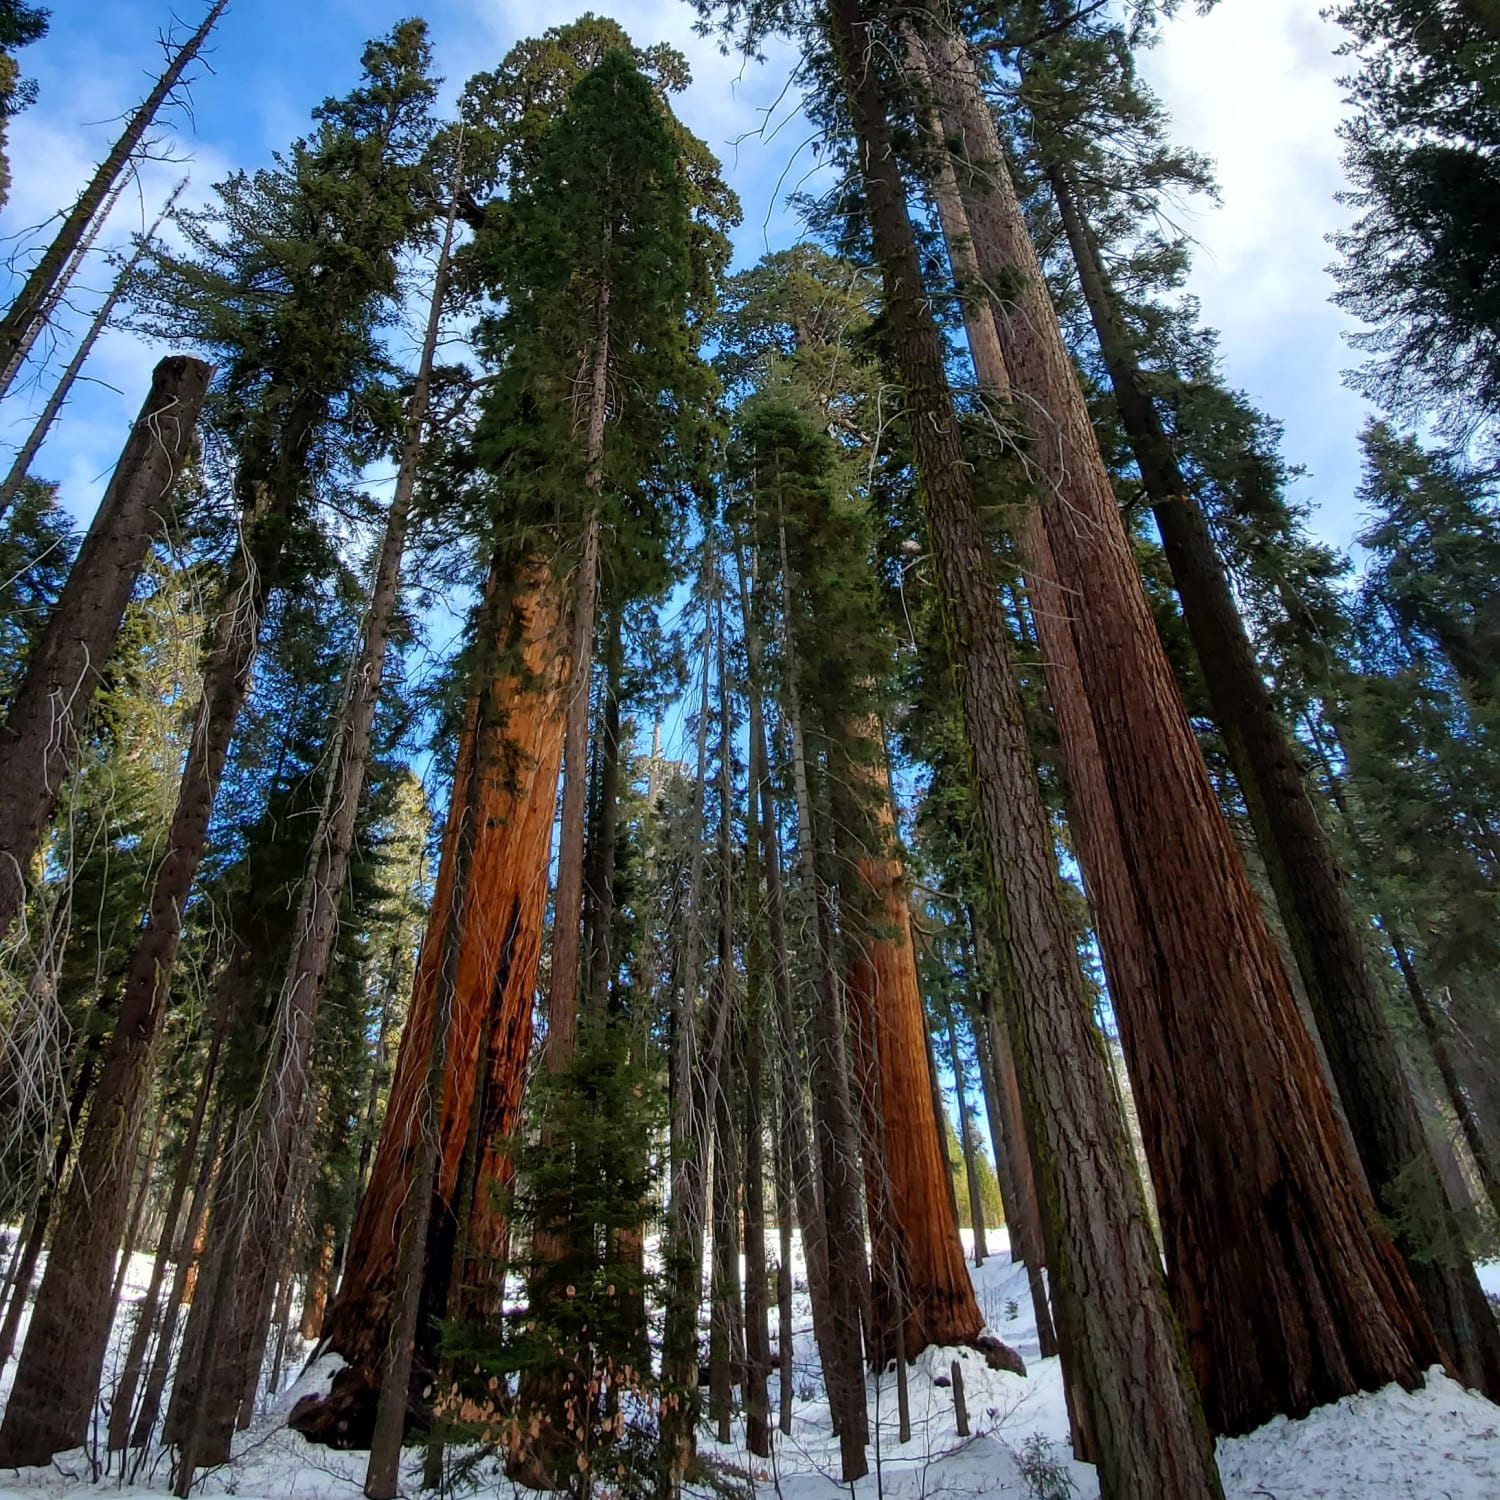 Walking among giants, Sequoia National Park, CA, USA